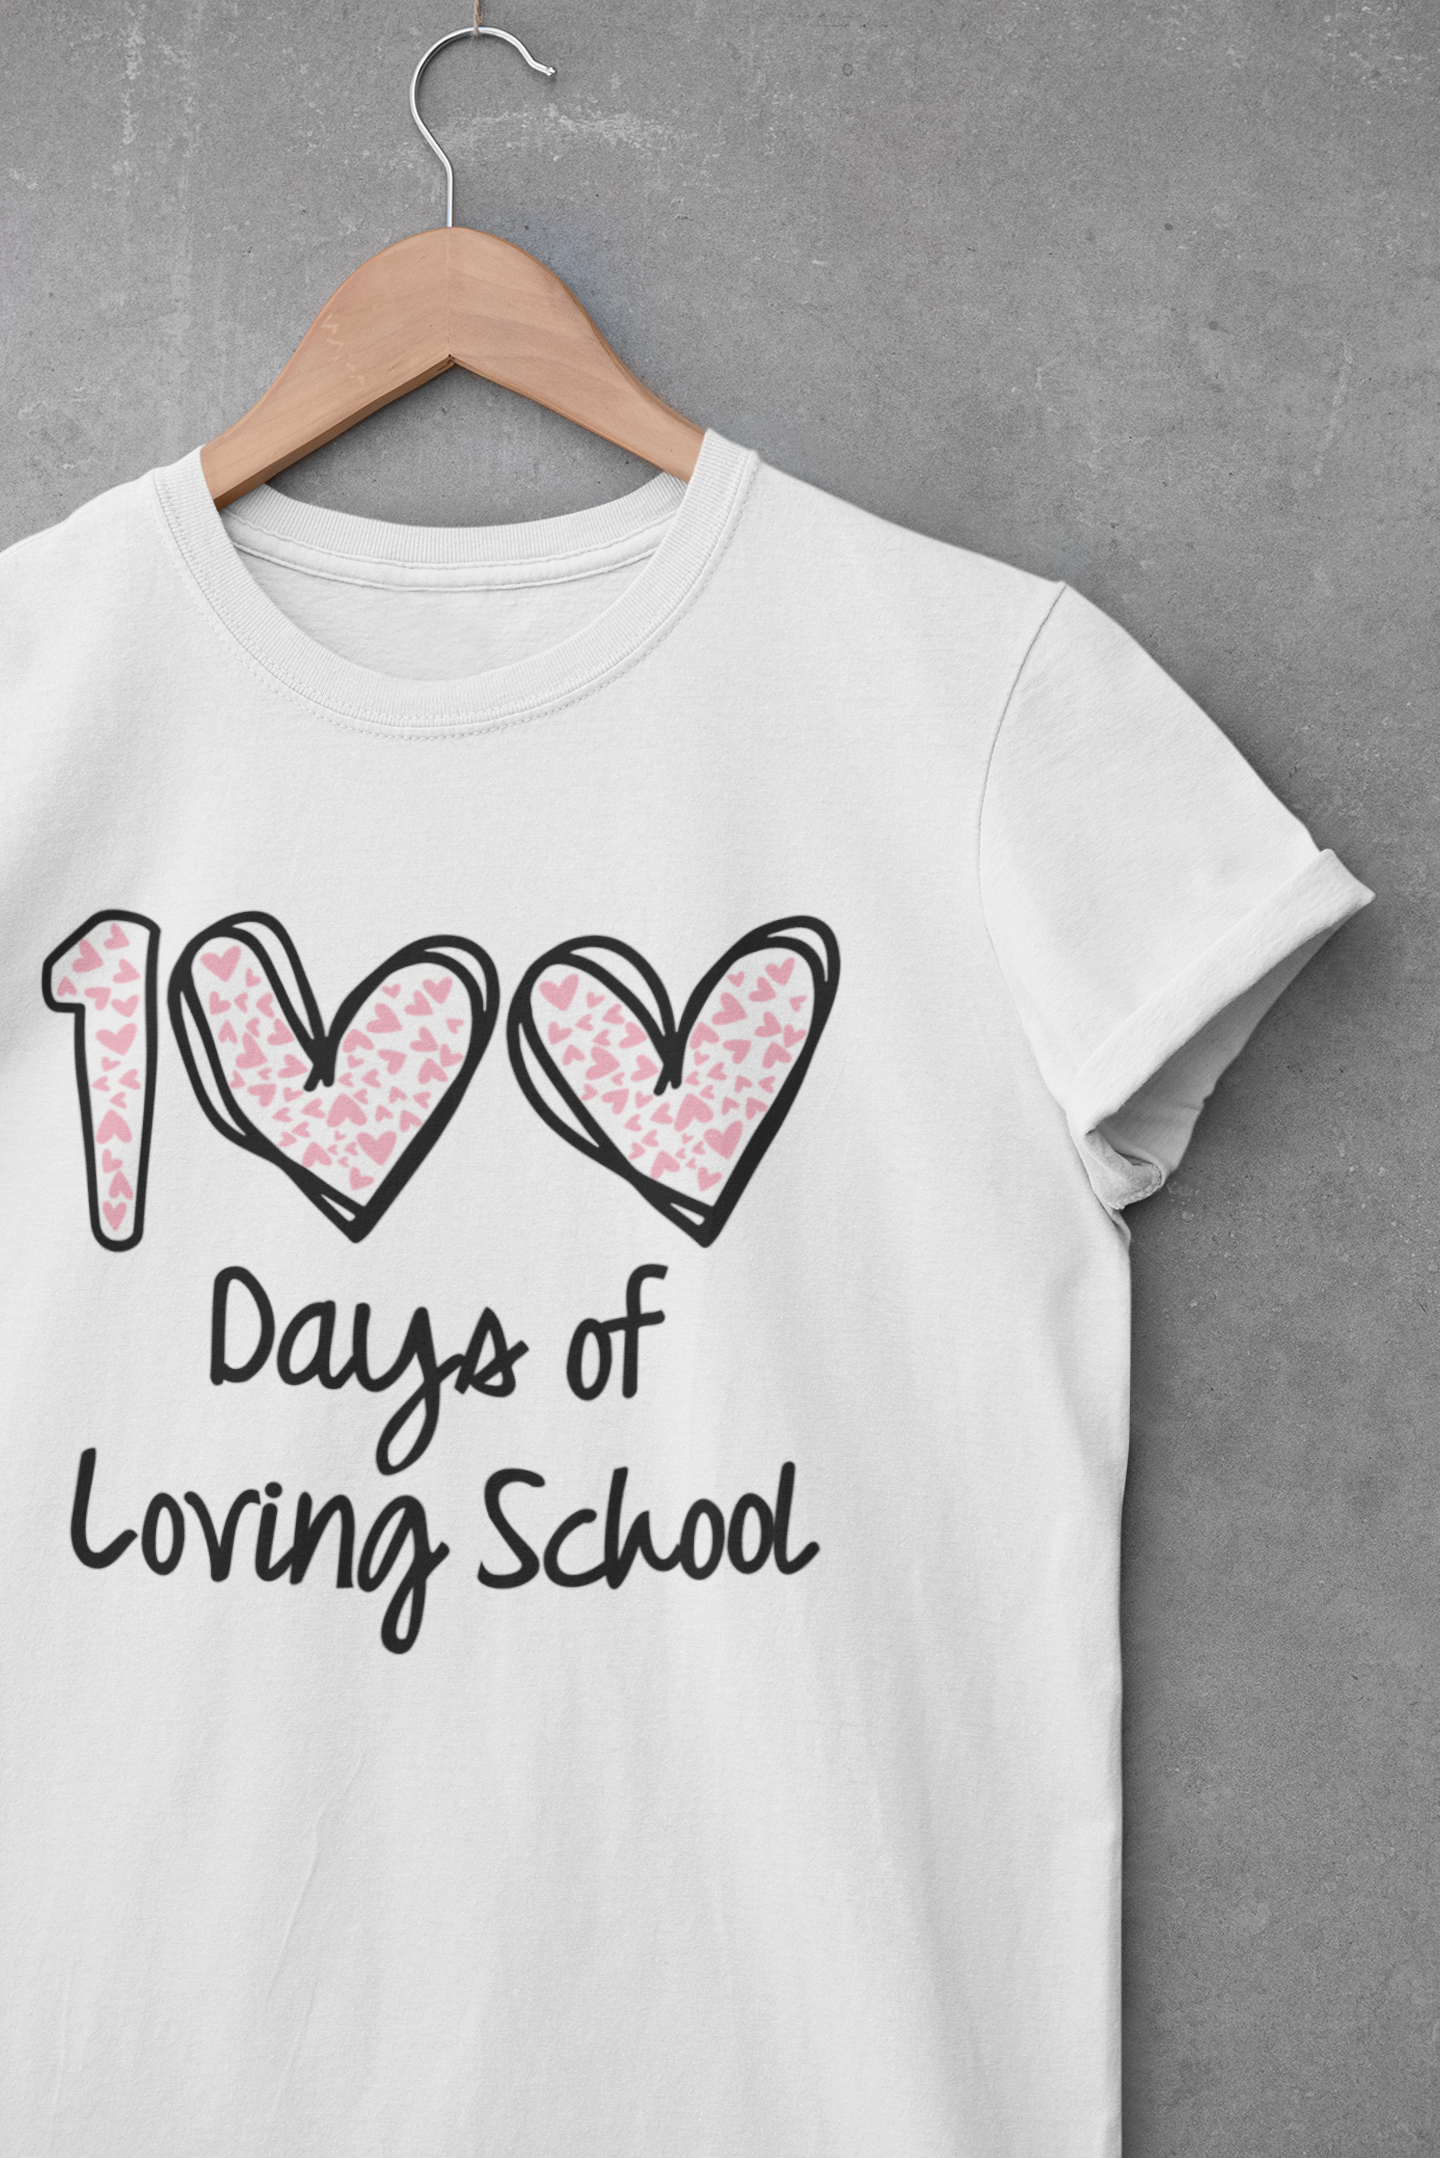 100 Days of Loving School Tee